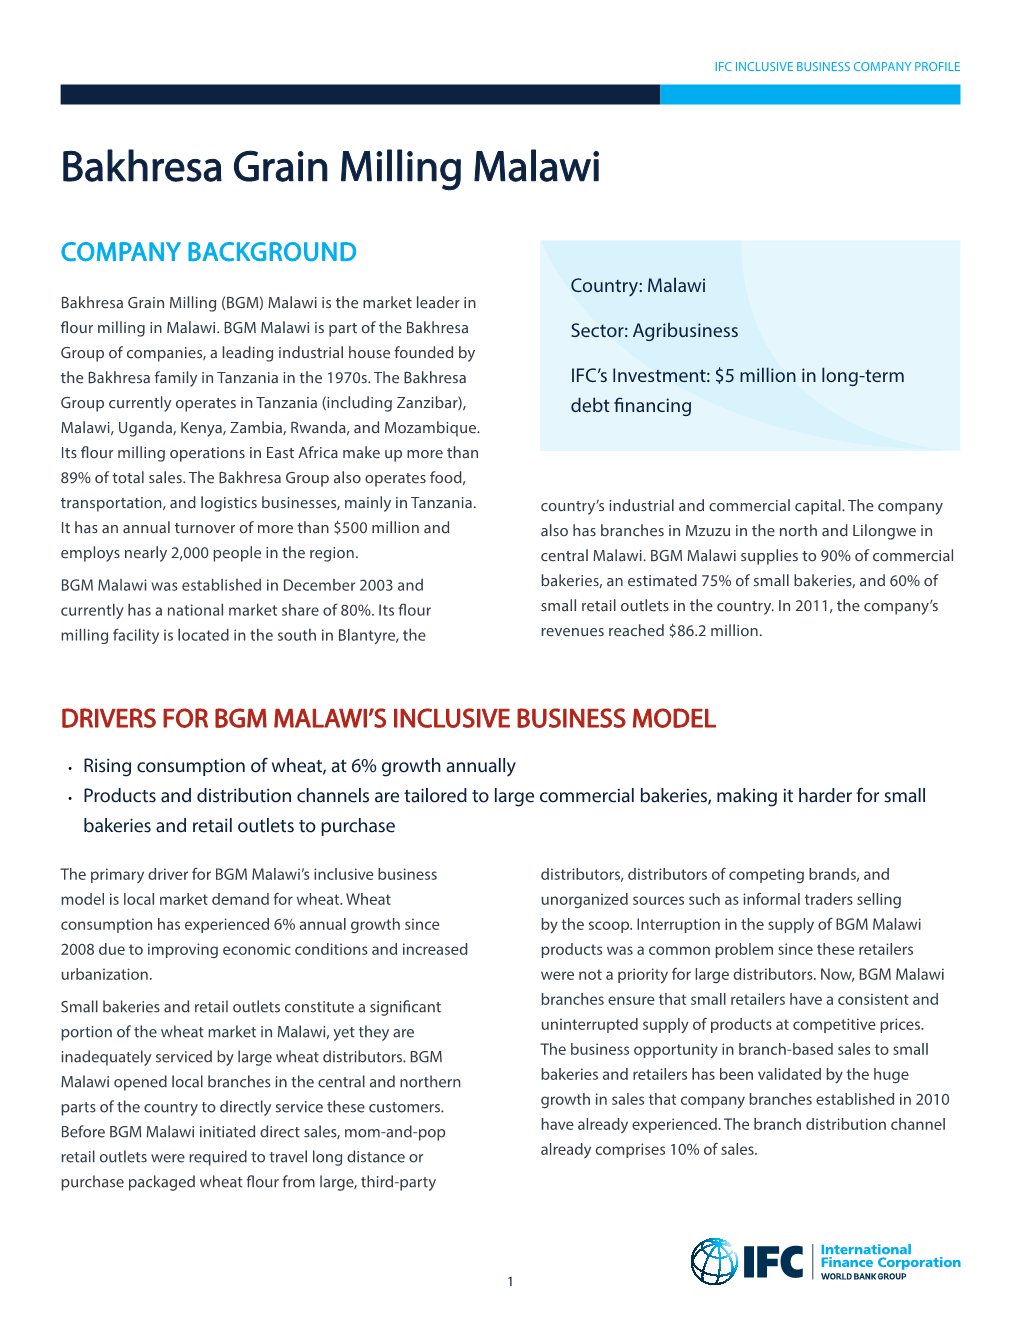 Aug 1, 2012 Bakhresa Grain Milling Malawi